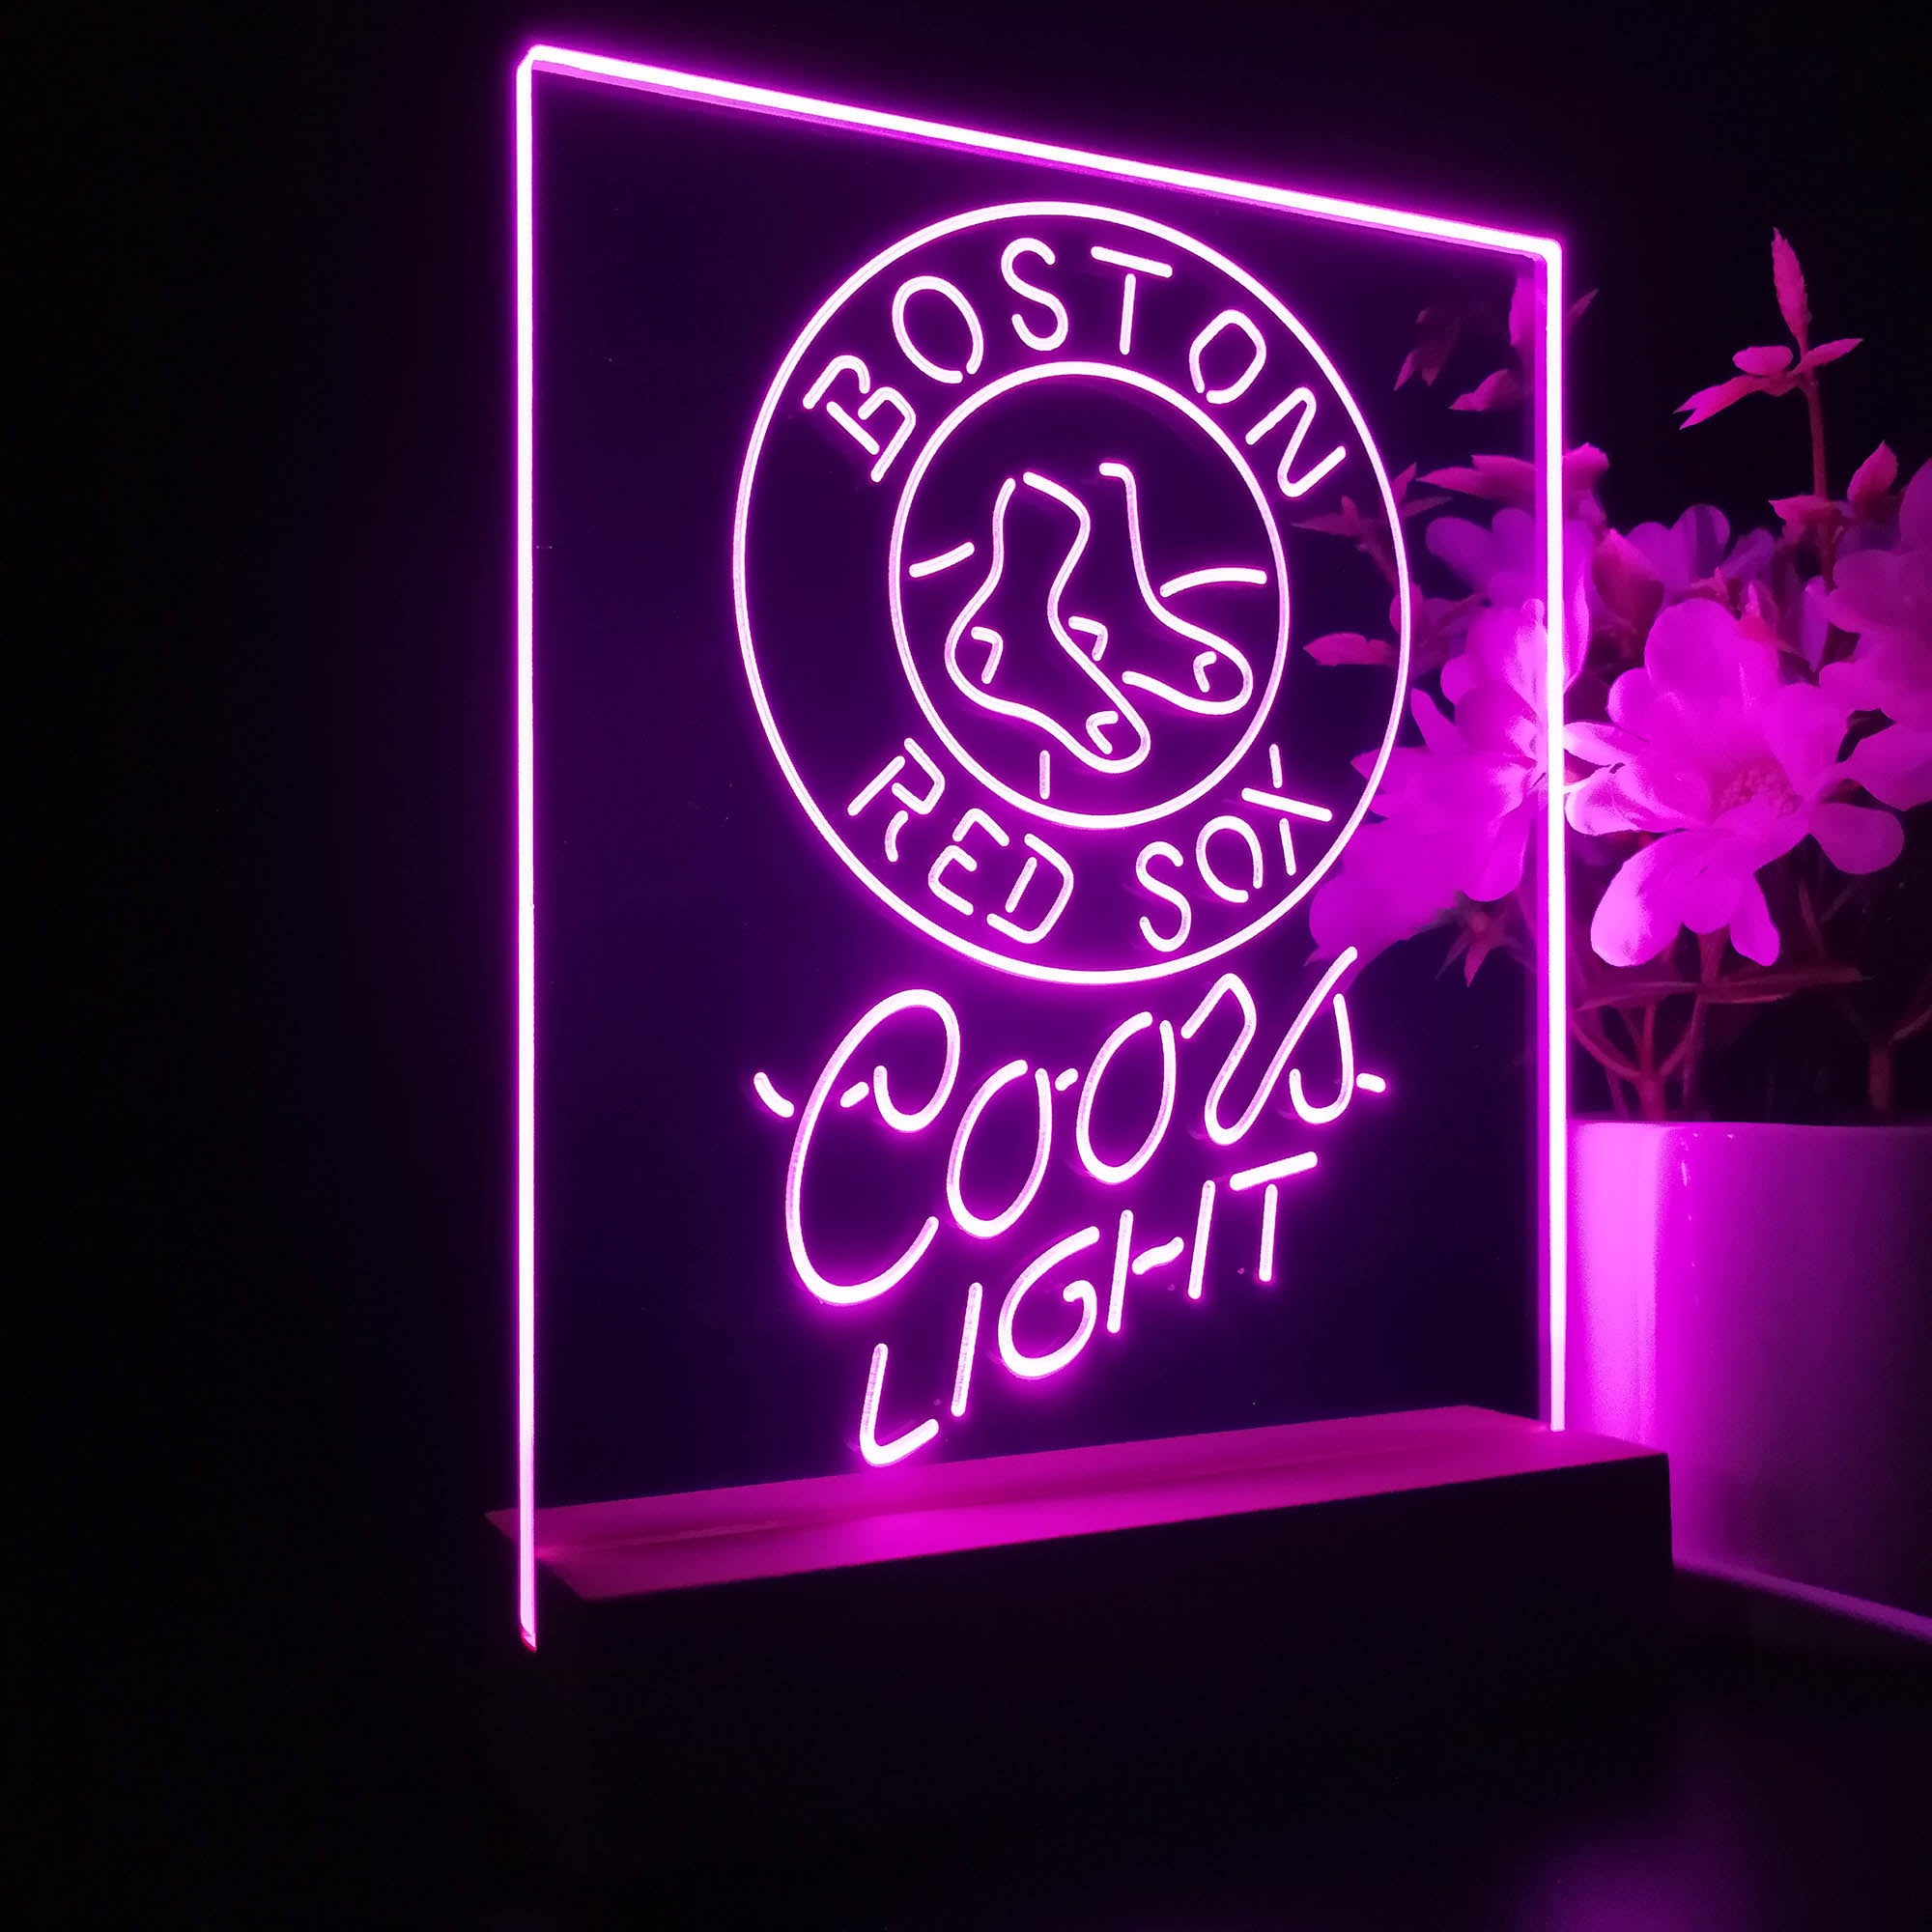 Boston Red Sox Coors Light 3D LED Optical Illusion Sport Team Night Light